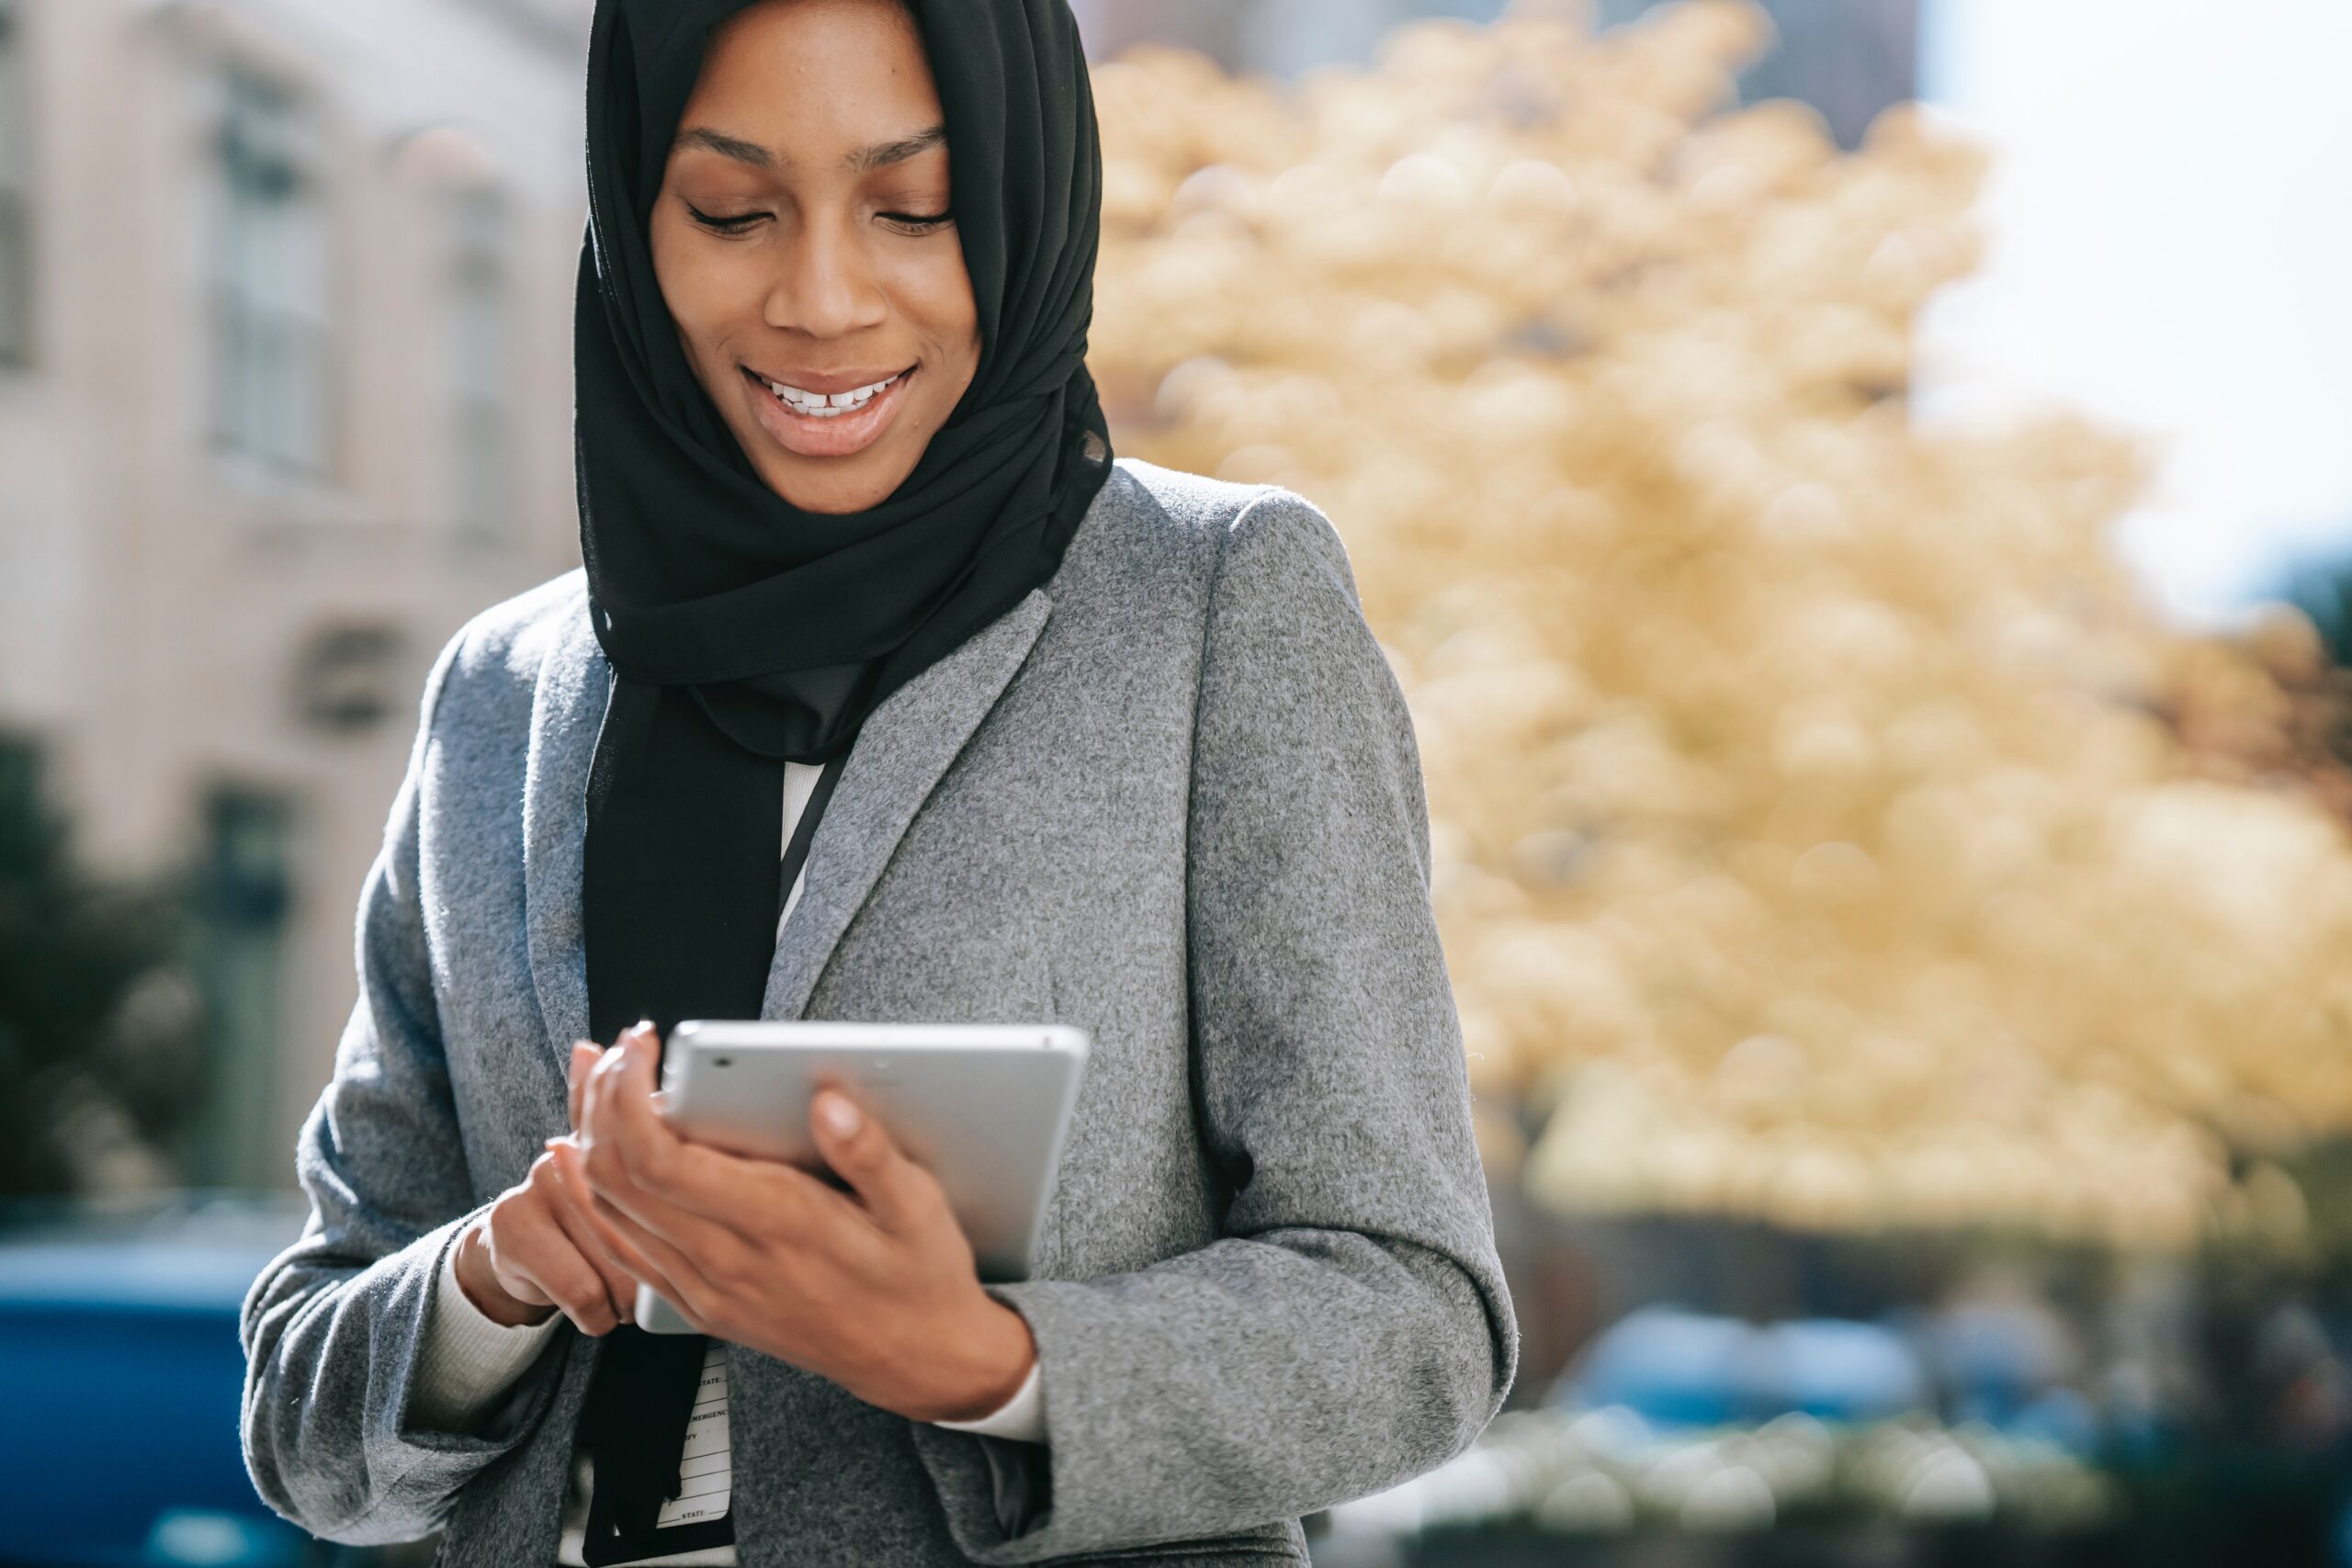 Business woman in hijab uses ipad